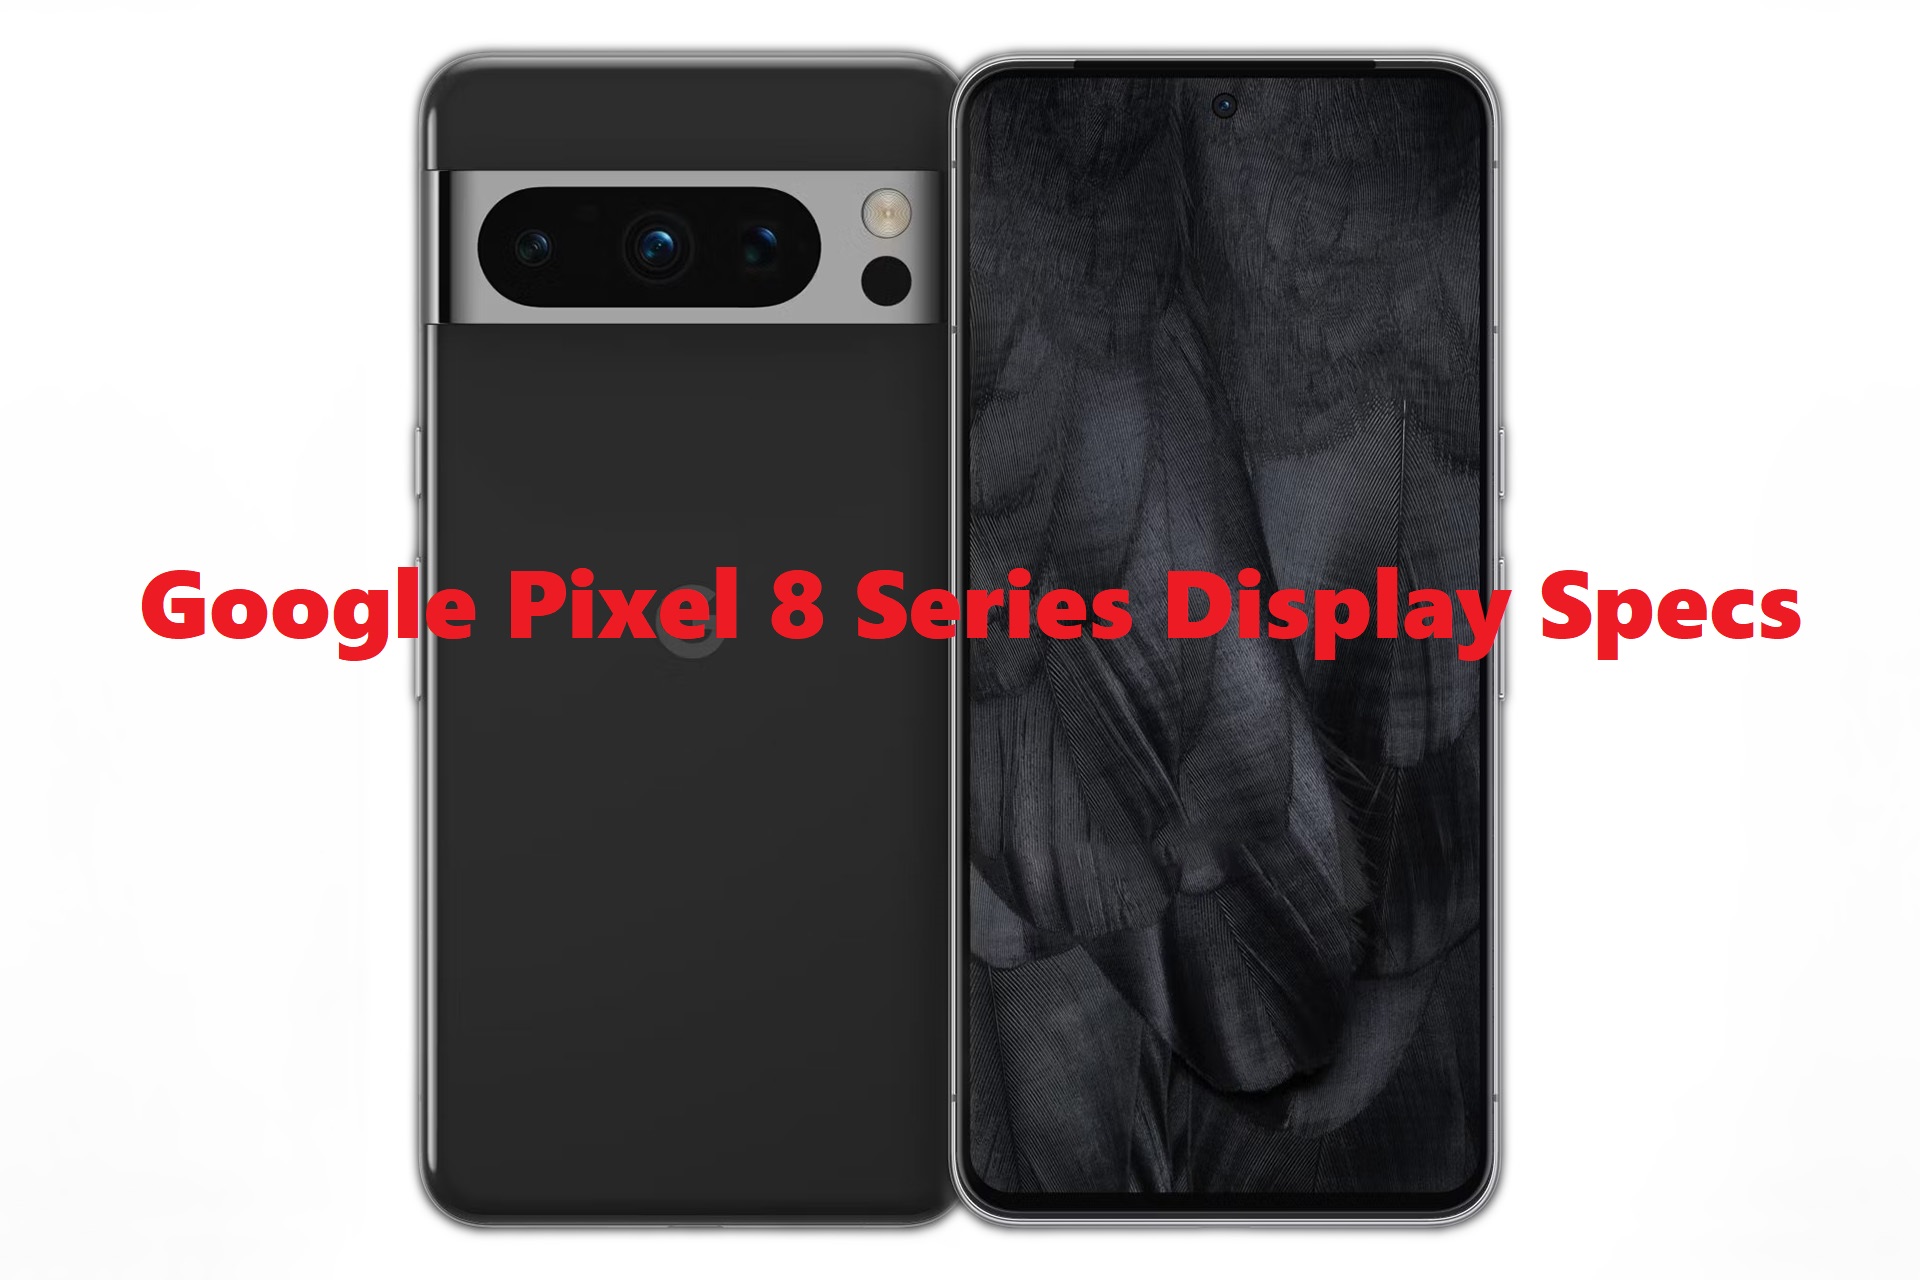 Google Pixel 8 Series Display Specs Exposed